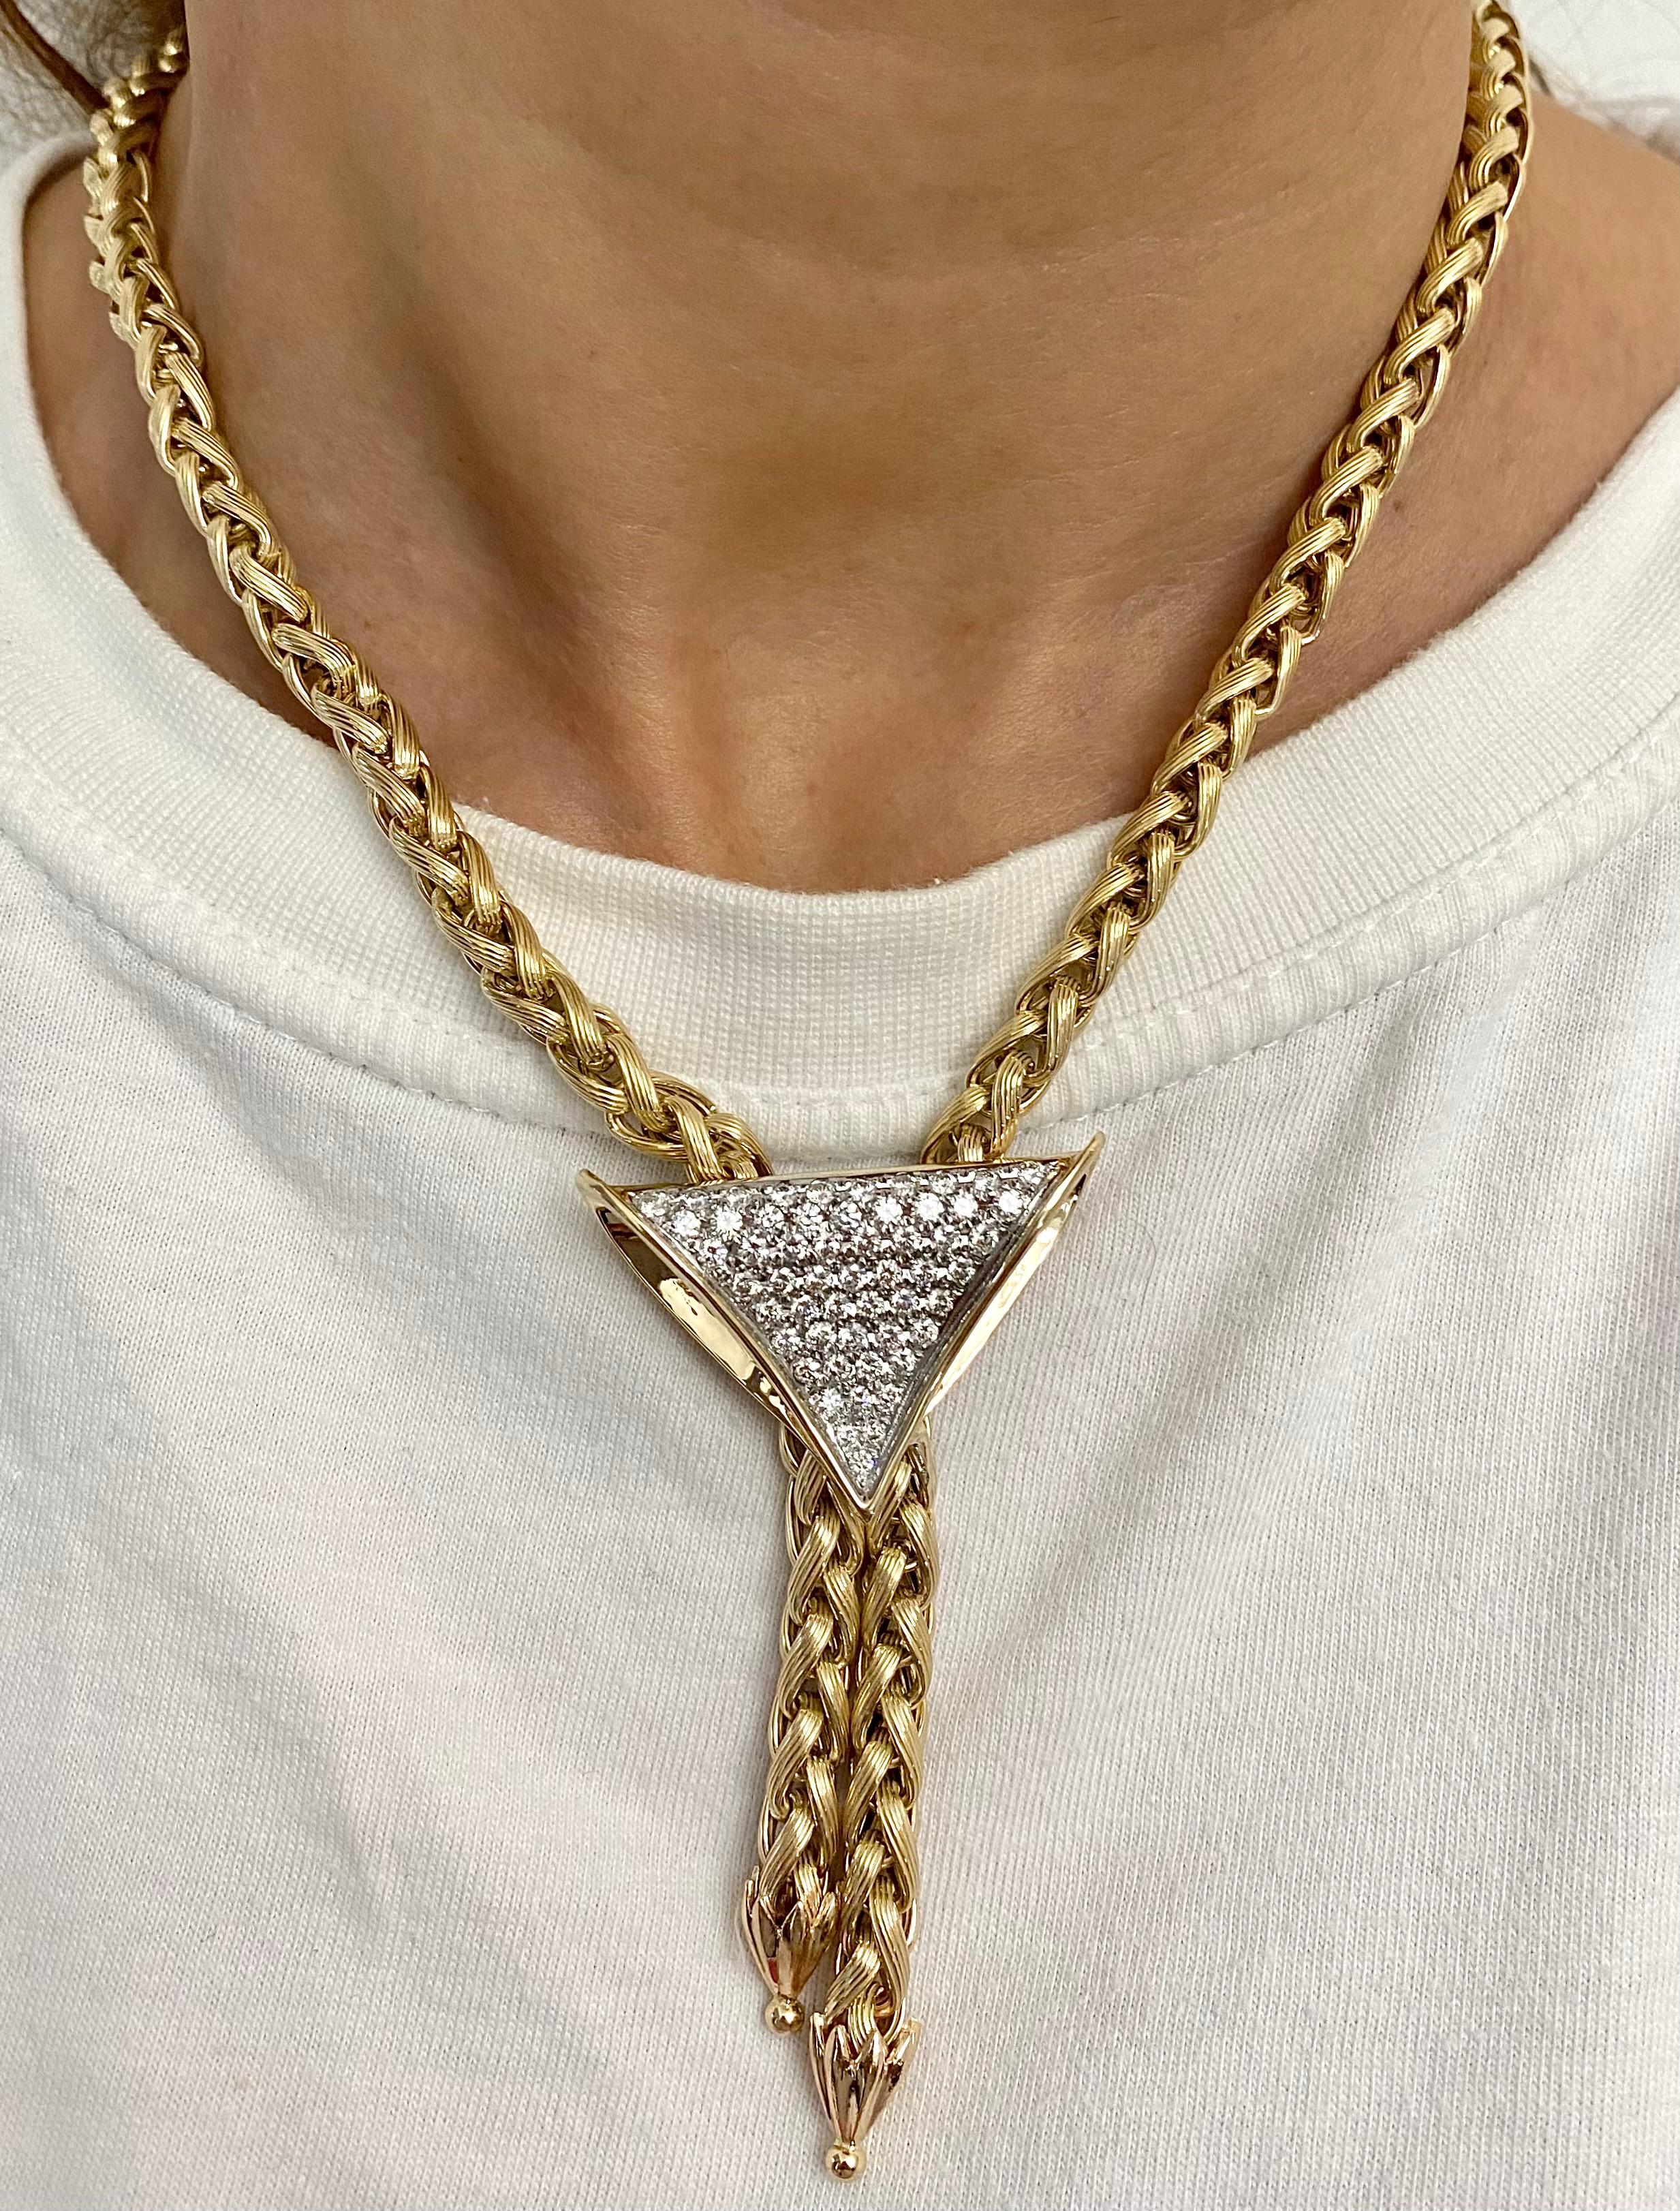 franco style necklace